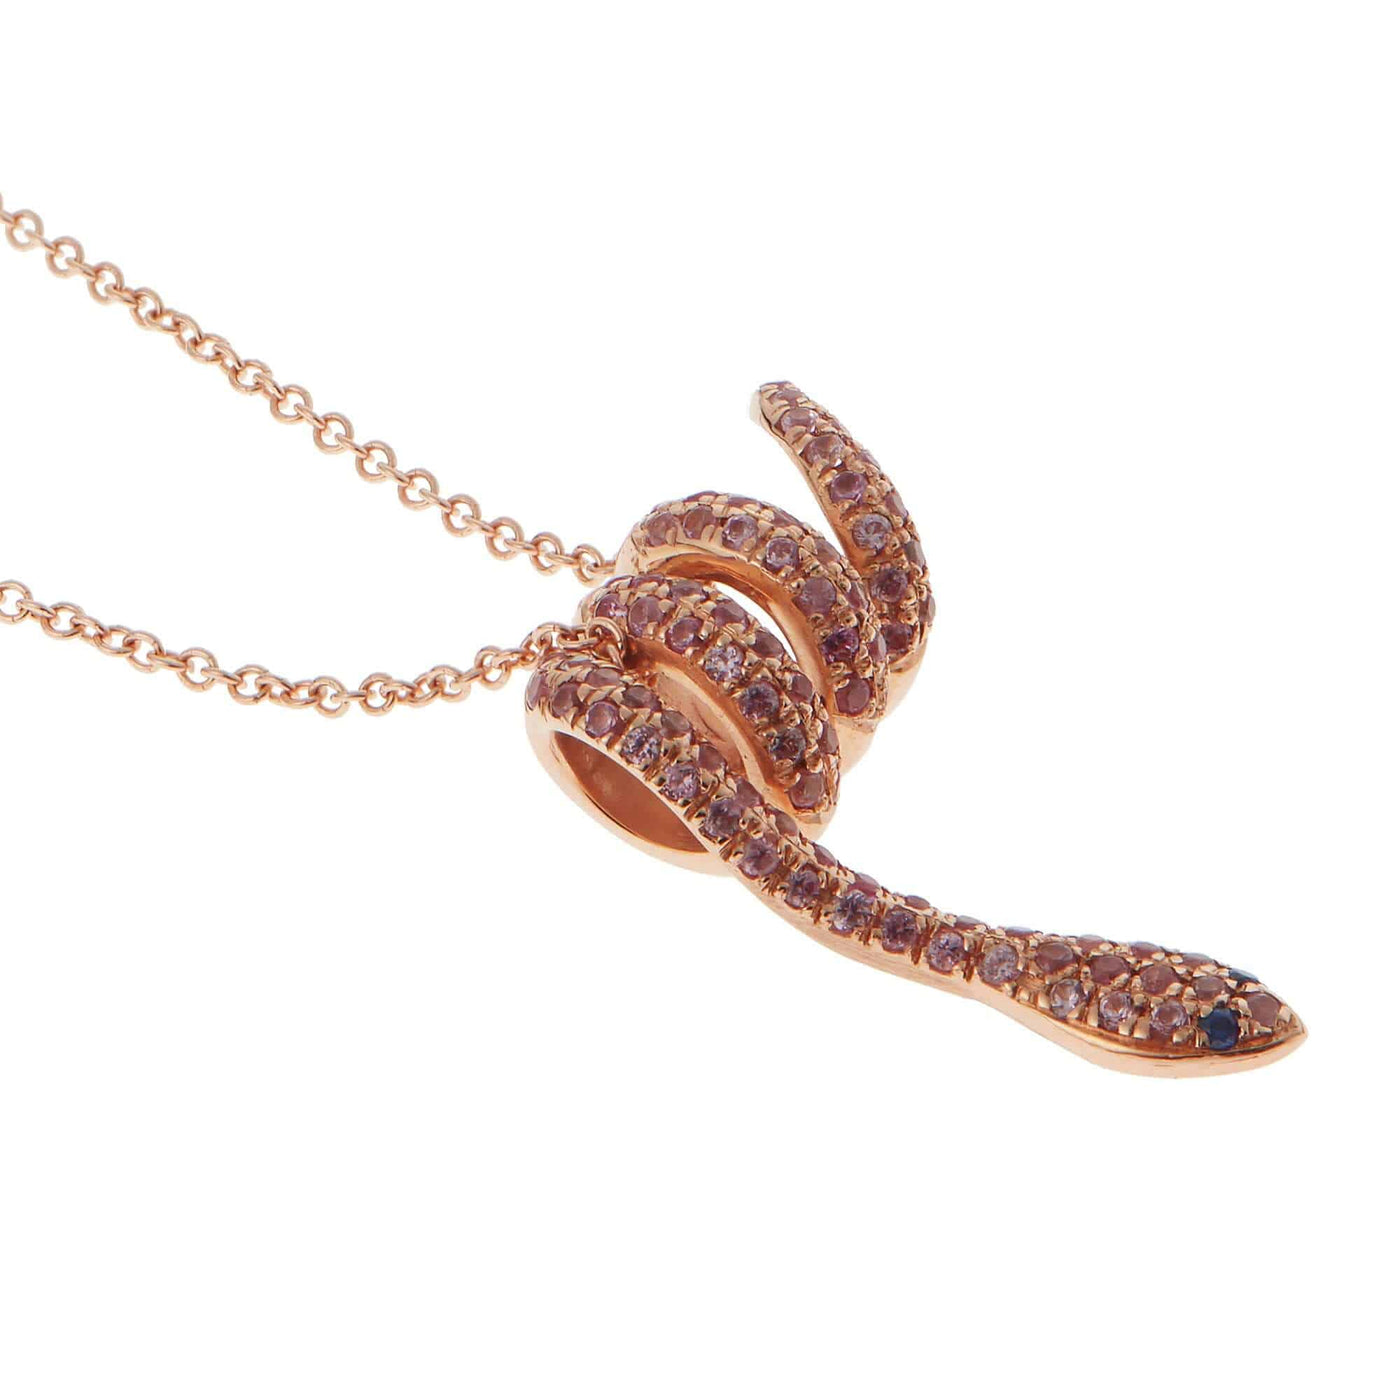 Curled Snake Pendant P-Ps-Bs - SNAKES - Ileana Makri store